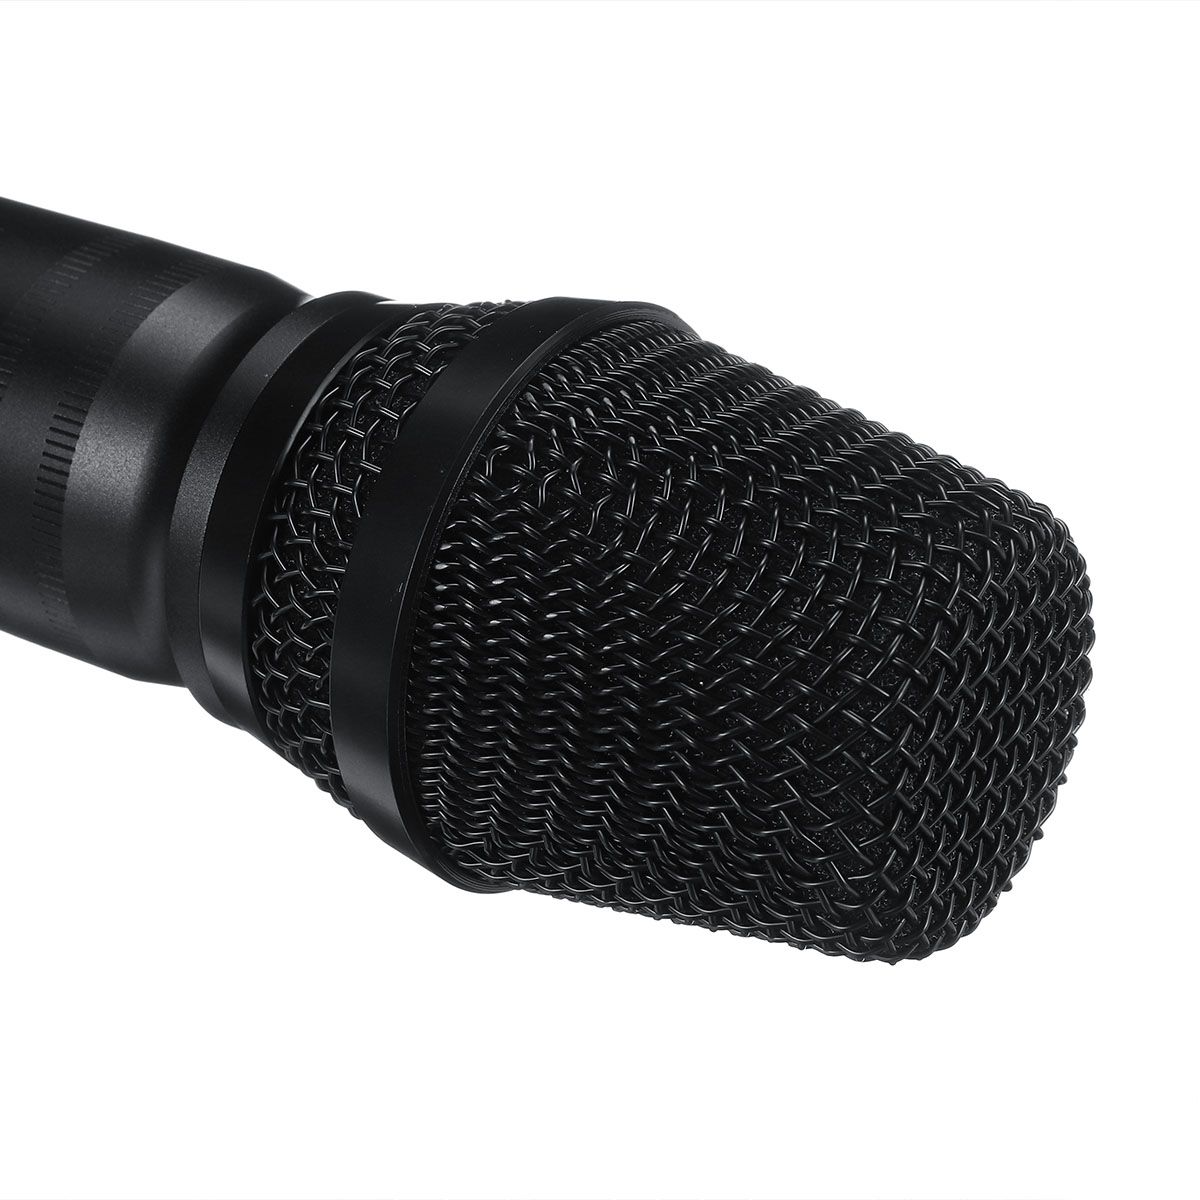 UW-01-UHF-Wireless-Microphone-System-Handheld-LED-Karaoke-KTV-Mic-with-Receiver-1680775